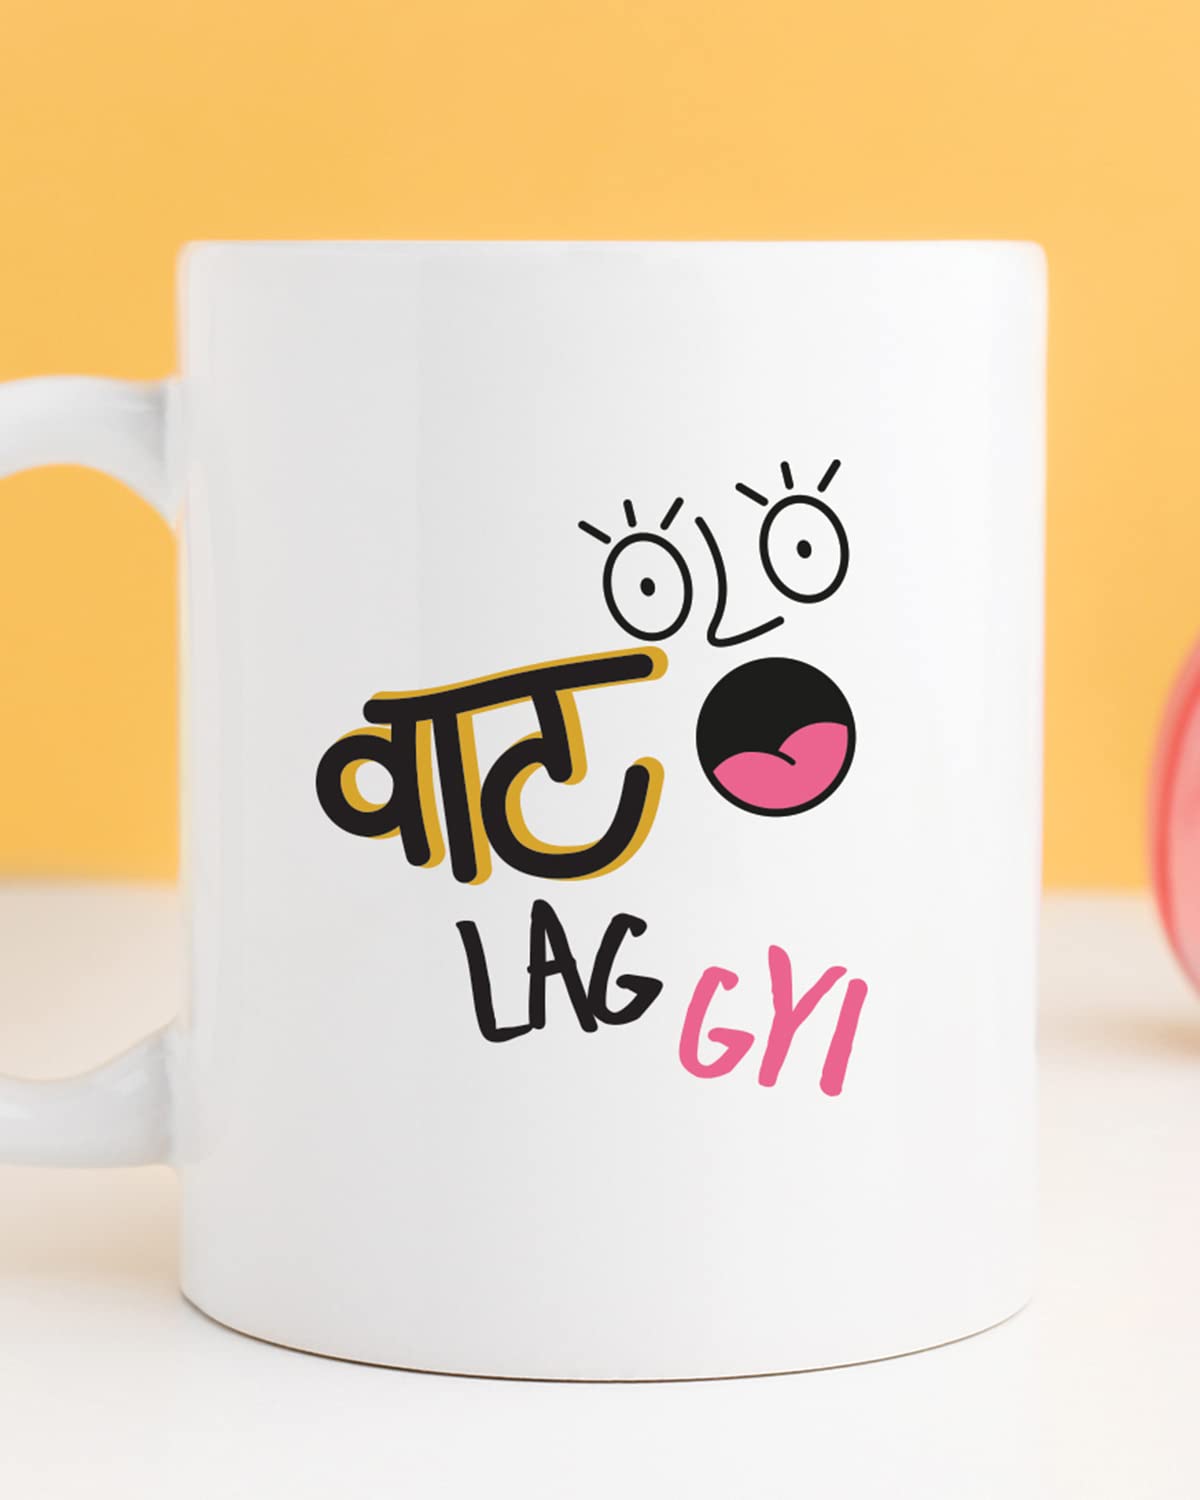 VAAT LAG GYI Coffee Mug - Gift for Friend, Birthday Gift, Birthday Mug, Motivational Quotes Mug, Mugs with Funny & Funky Dialogues, Bollywood Mugs, Funny Mugs for Him & Her